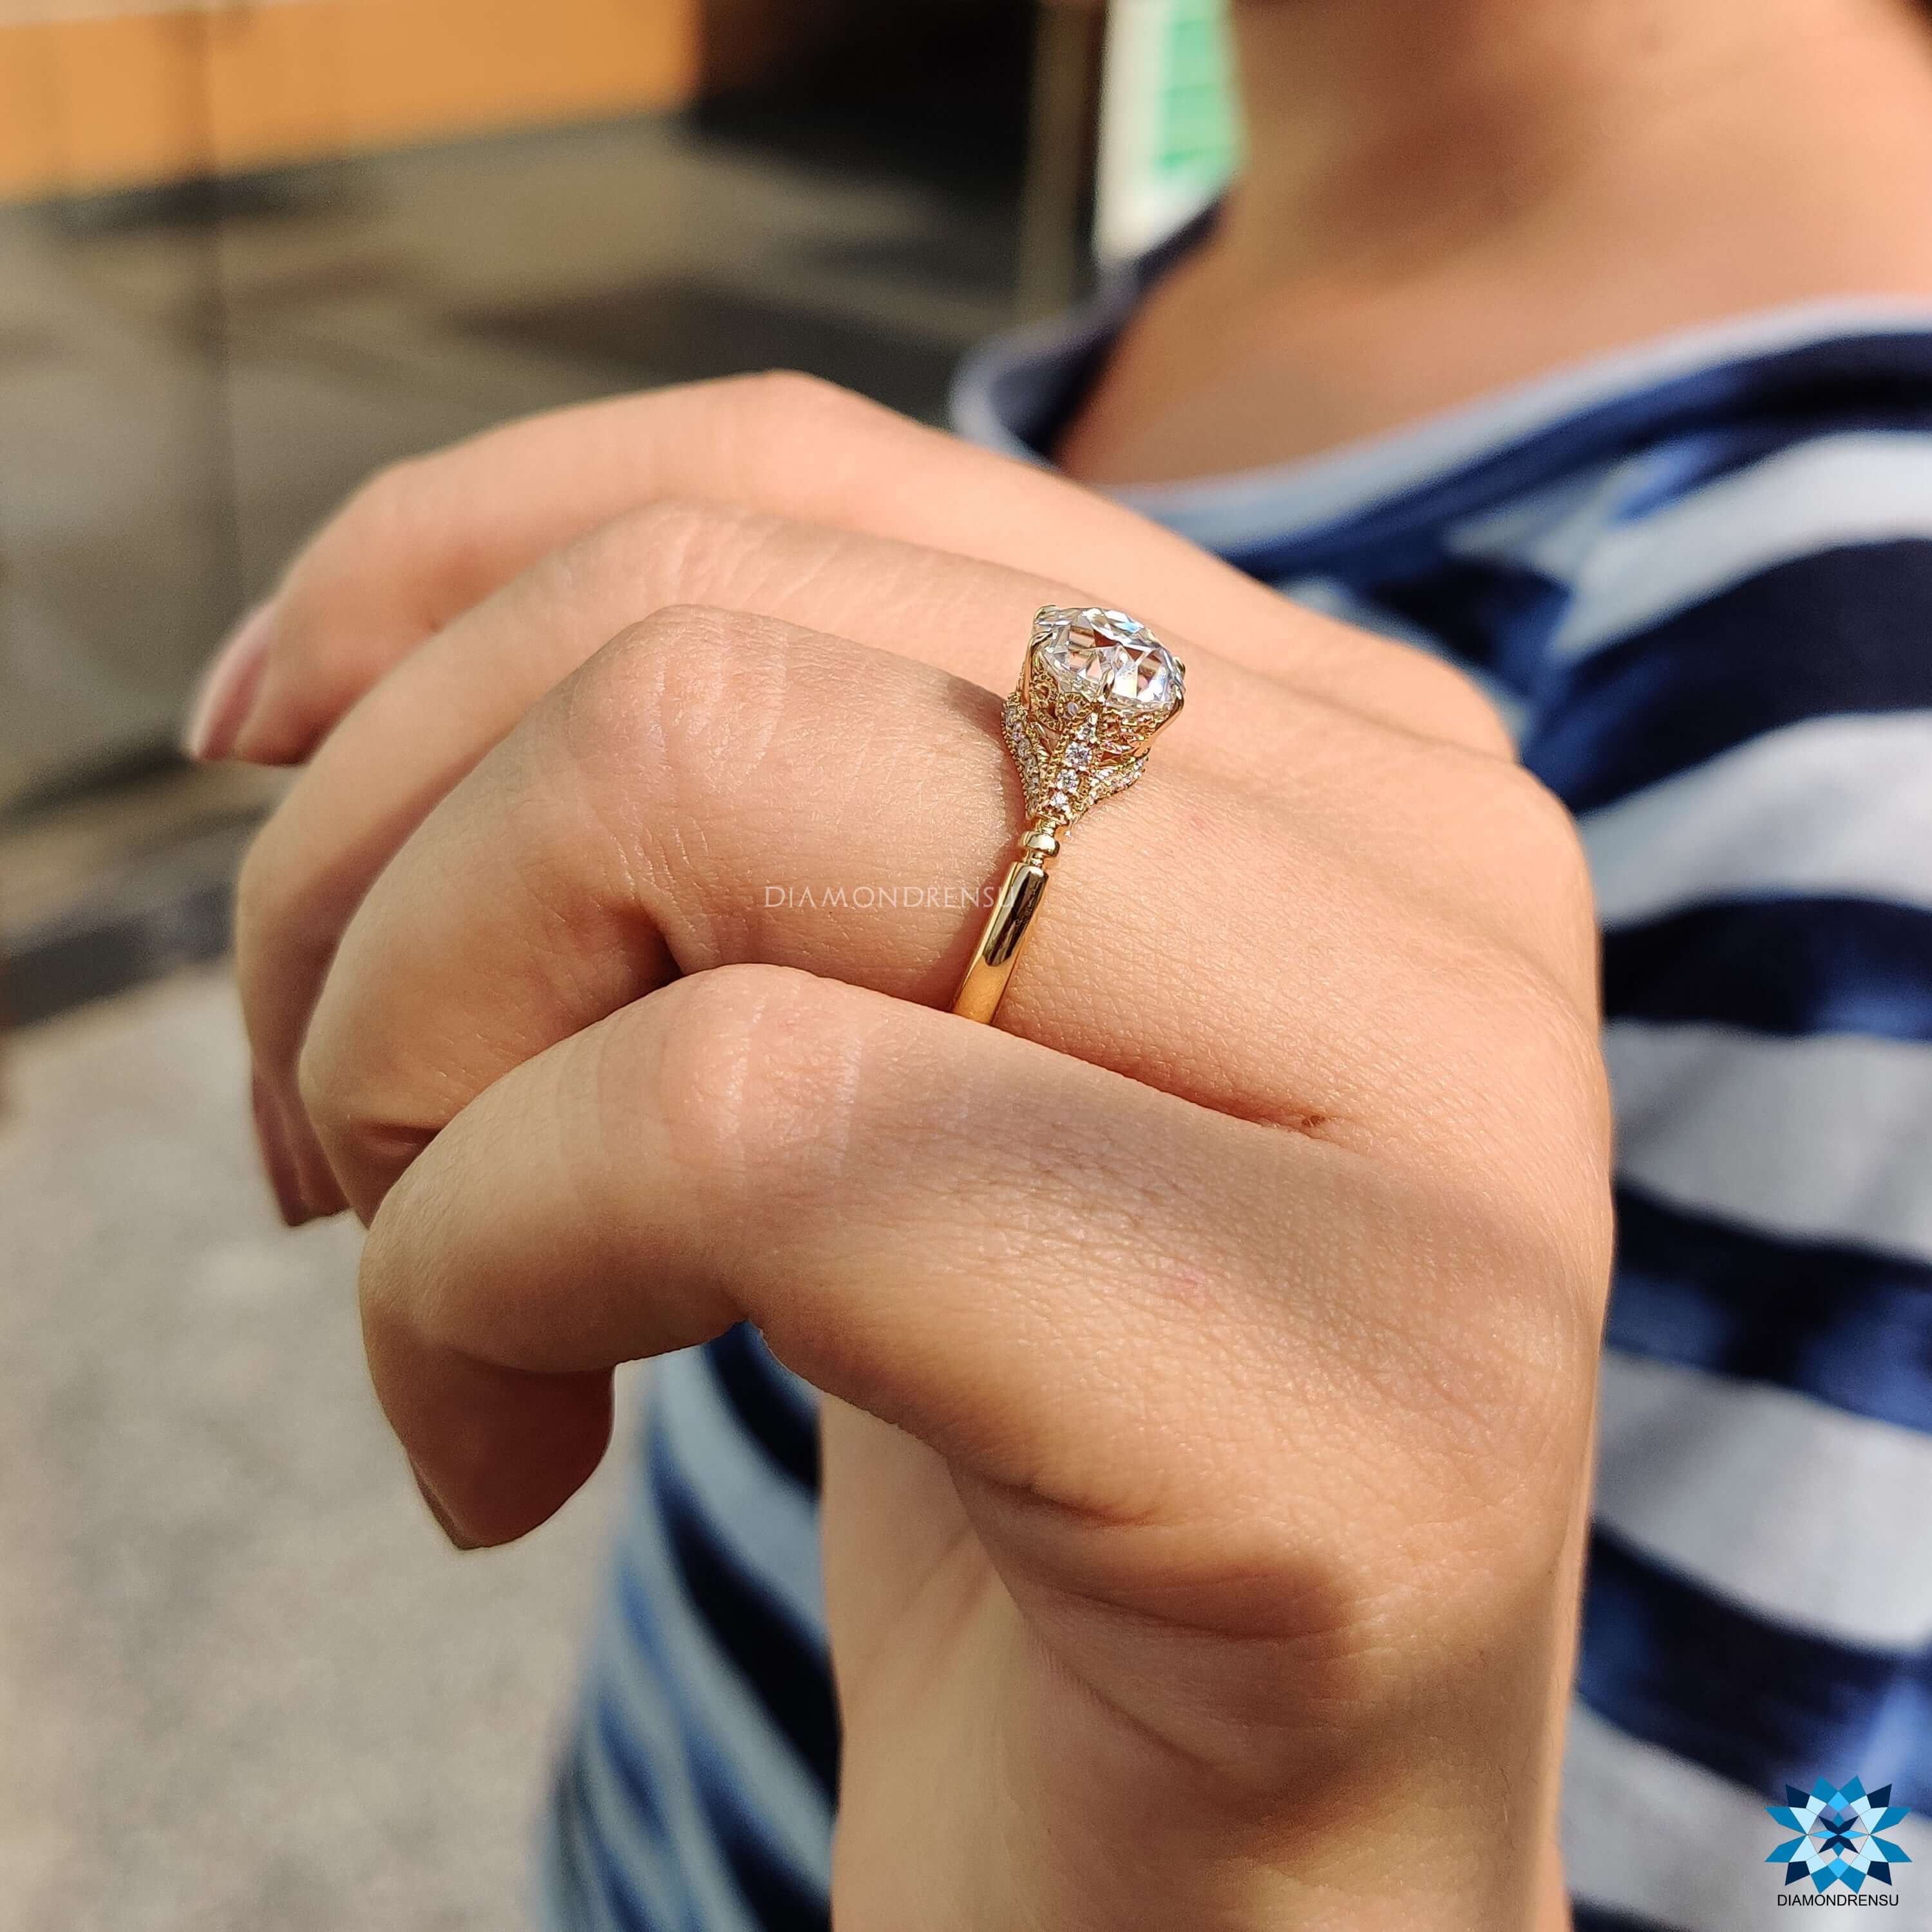 vintage diamond engagement rings - diamondrensu